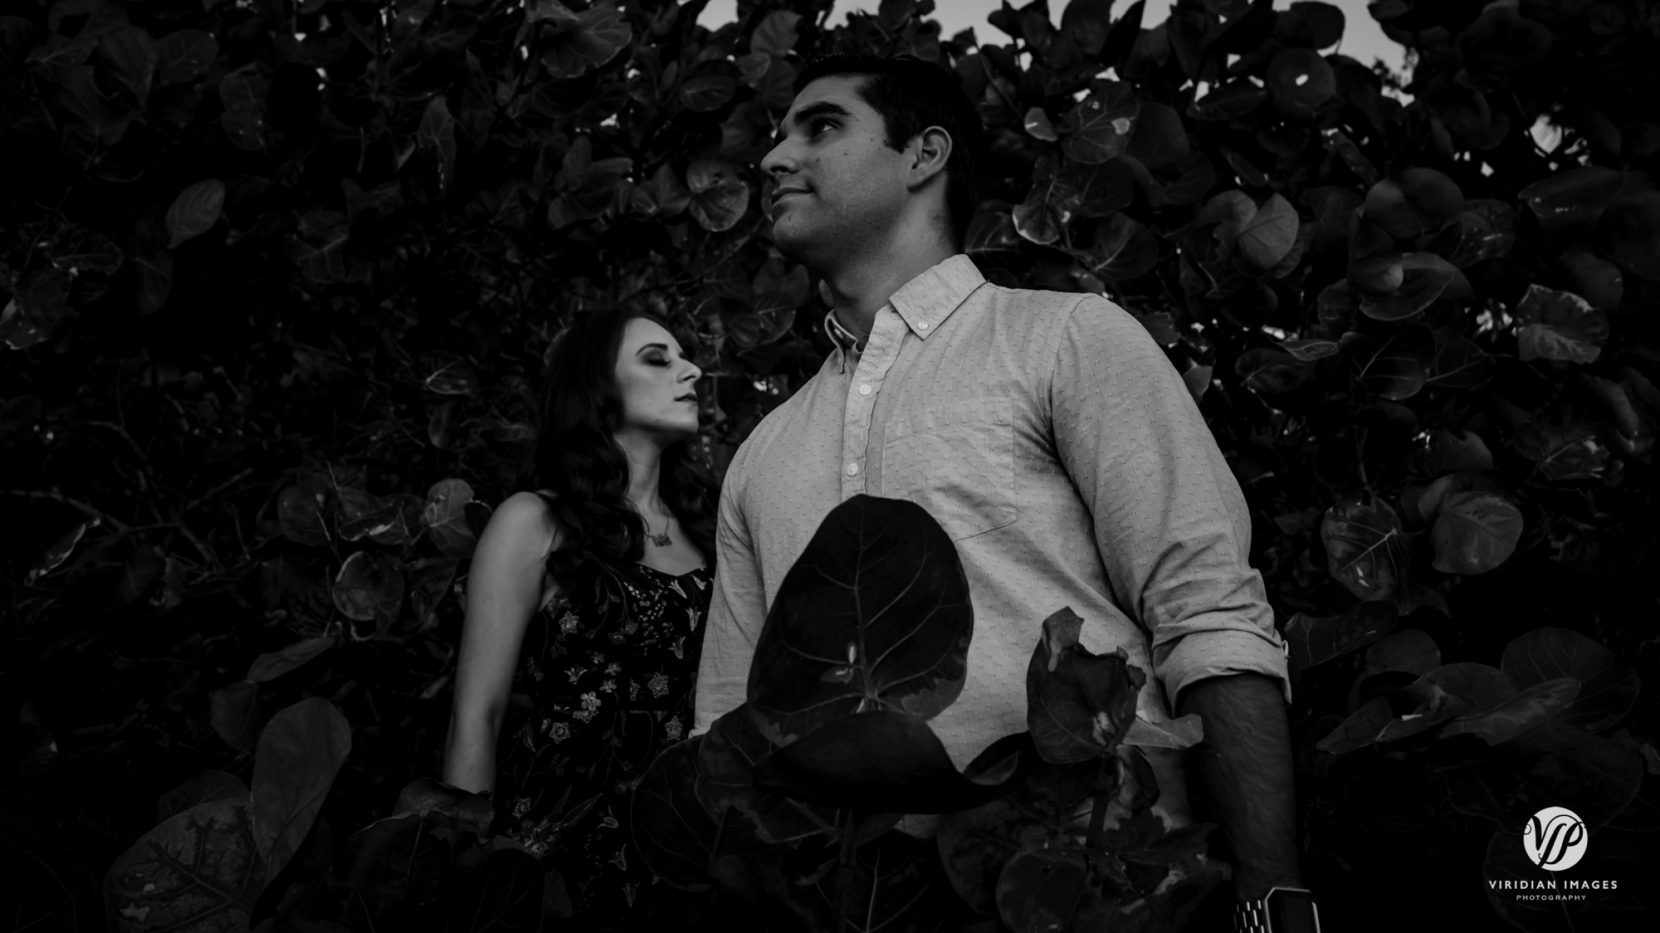 creative, artistic capture of couple inside leaves of south florida bush